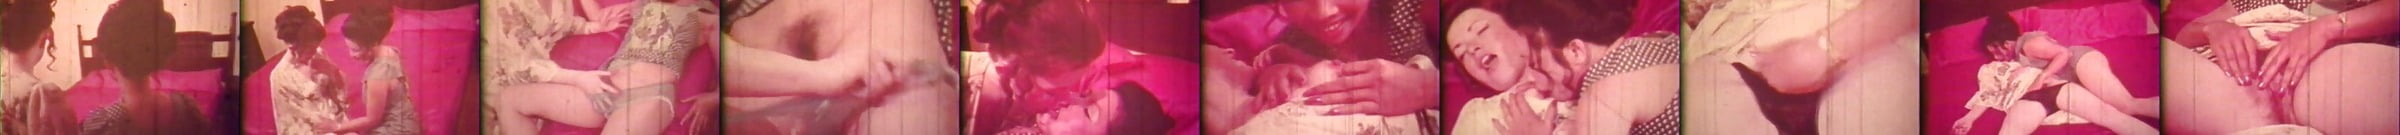 Vintage Ebony Lesbian Porn Videos Xhamster